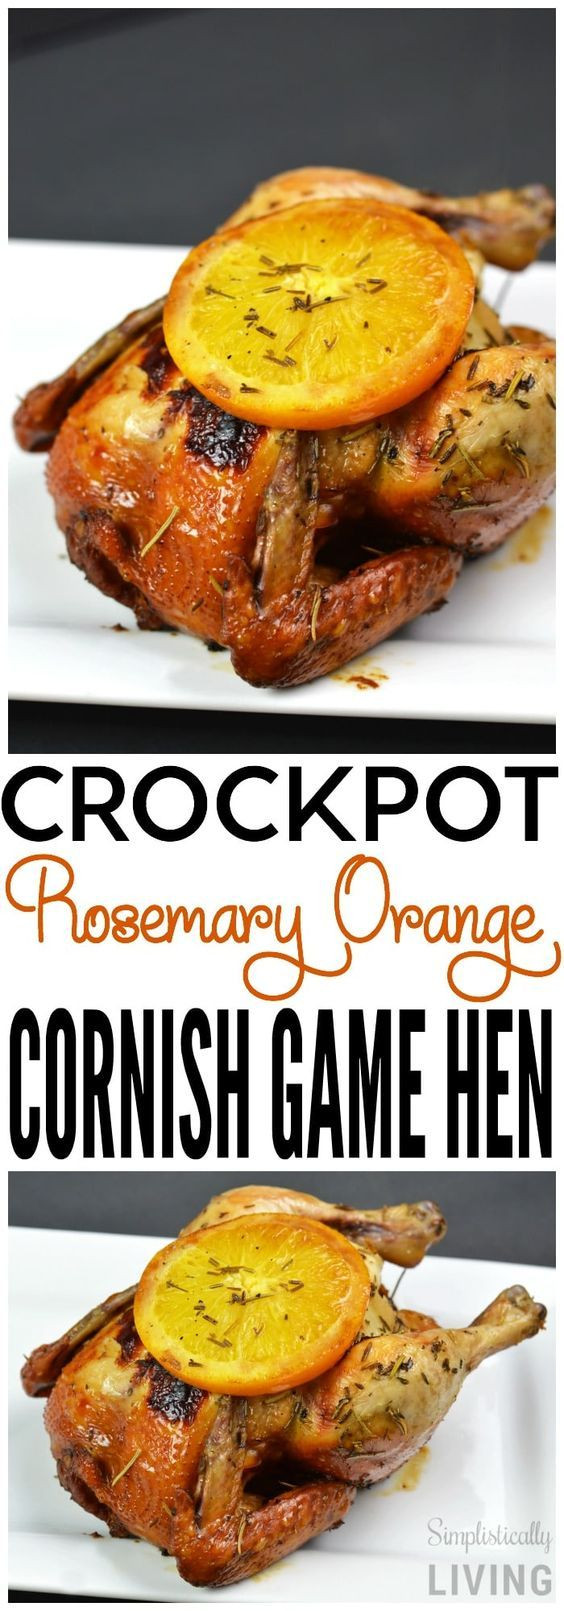 Cornish Game Hens Crockpot Recipes
 crockpot rosemary orange cornish game hen chicken in 2019